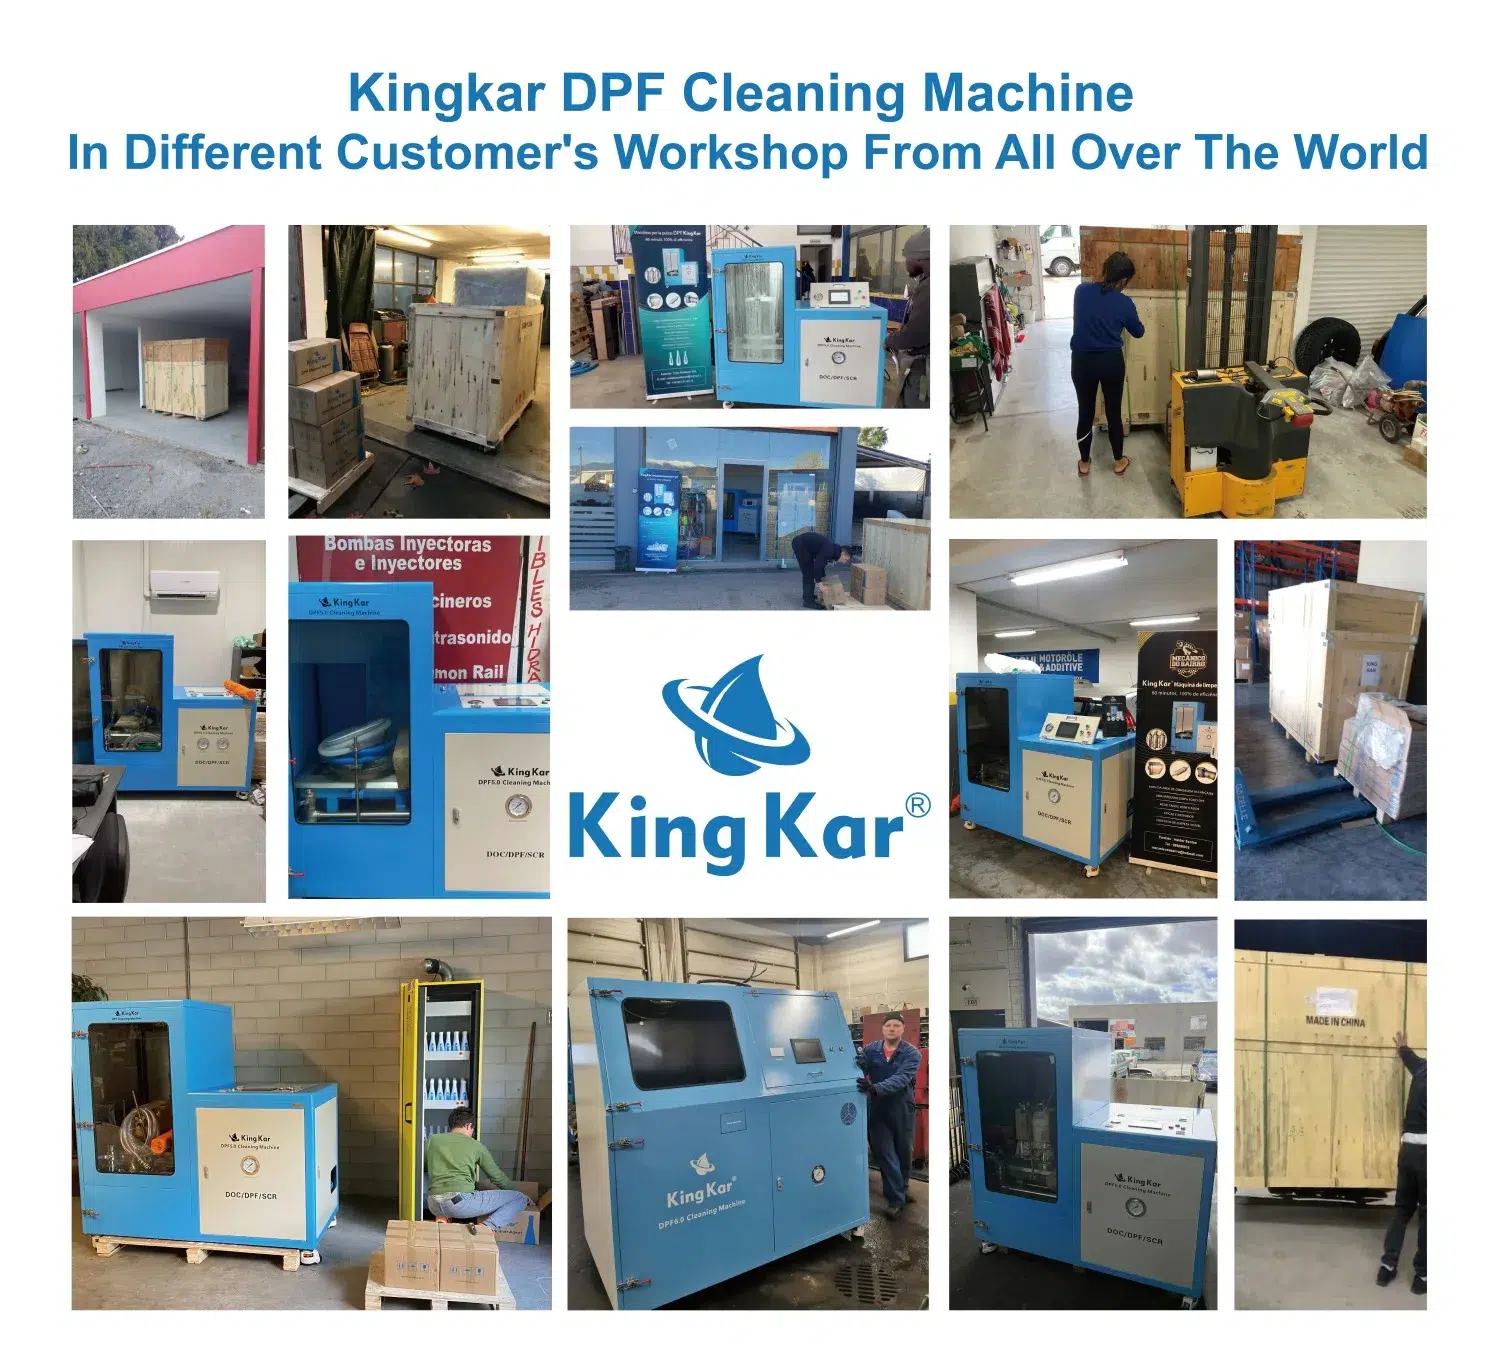 who needs a dpf cleaning machine - KingKar